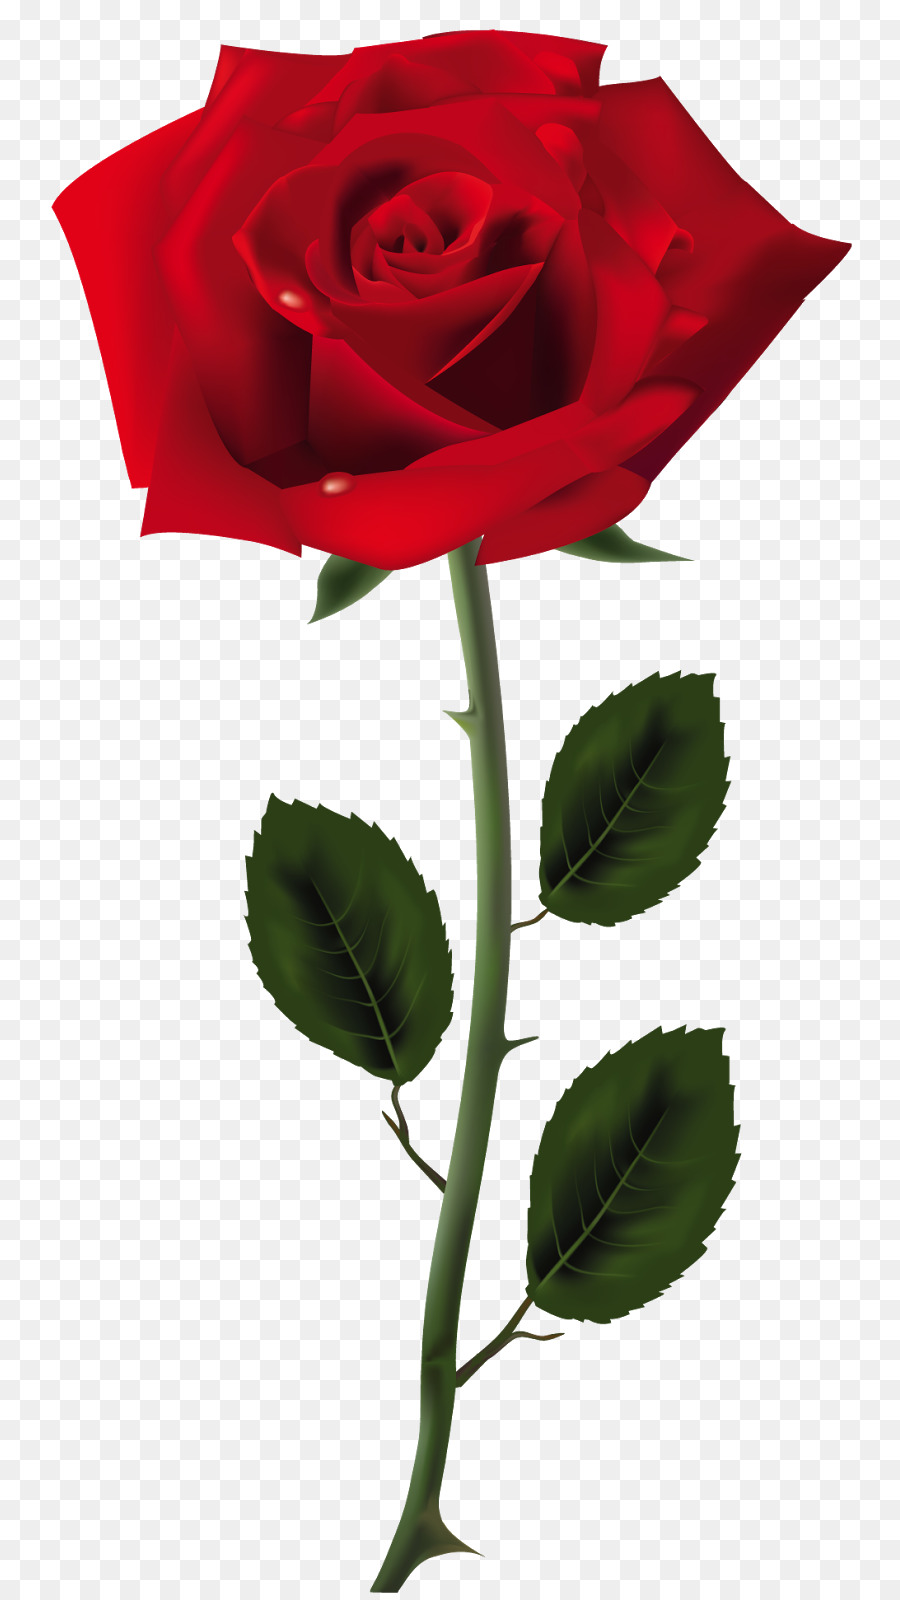 Rose Clip art - rose vector png download - 845*1600 - Free Transparent Rose png Download.